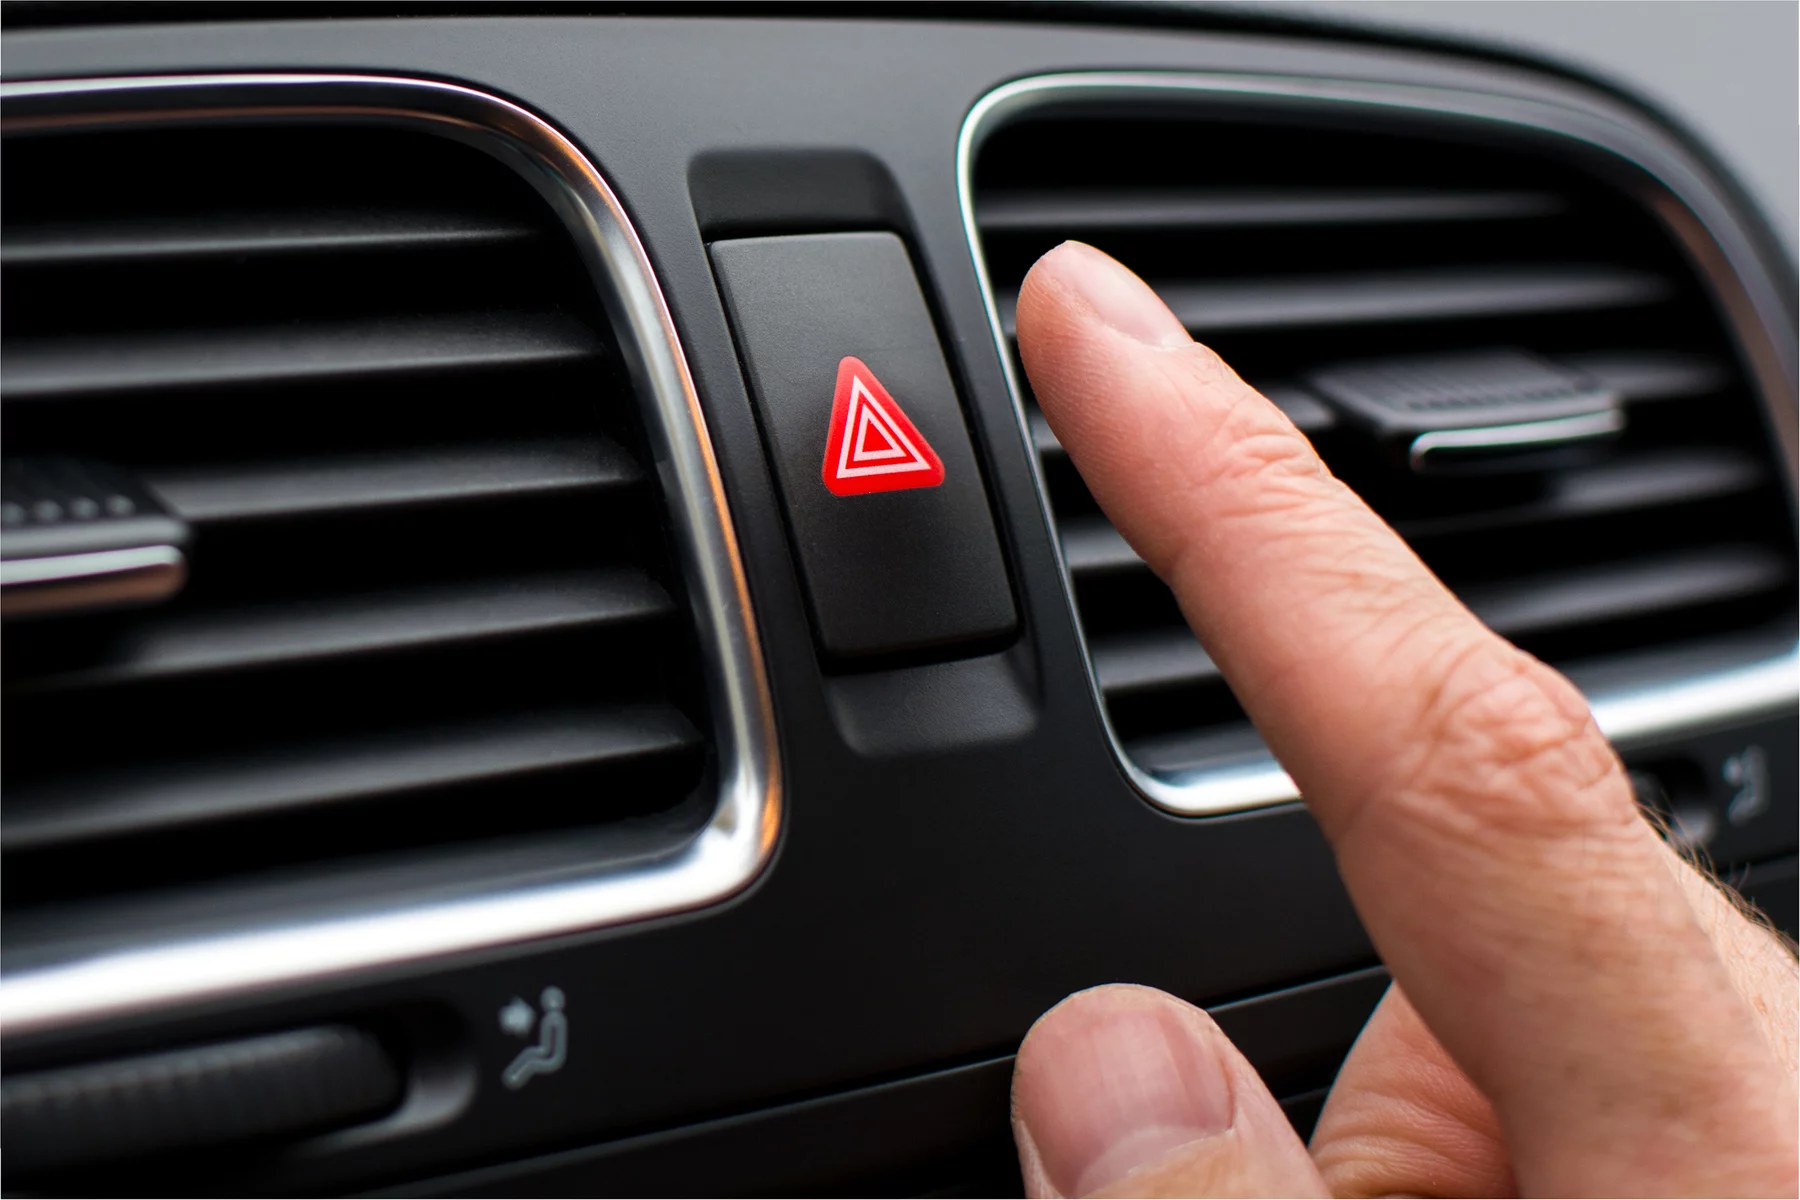 pressing the hazard light in a car